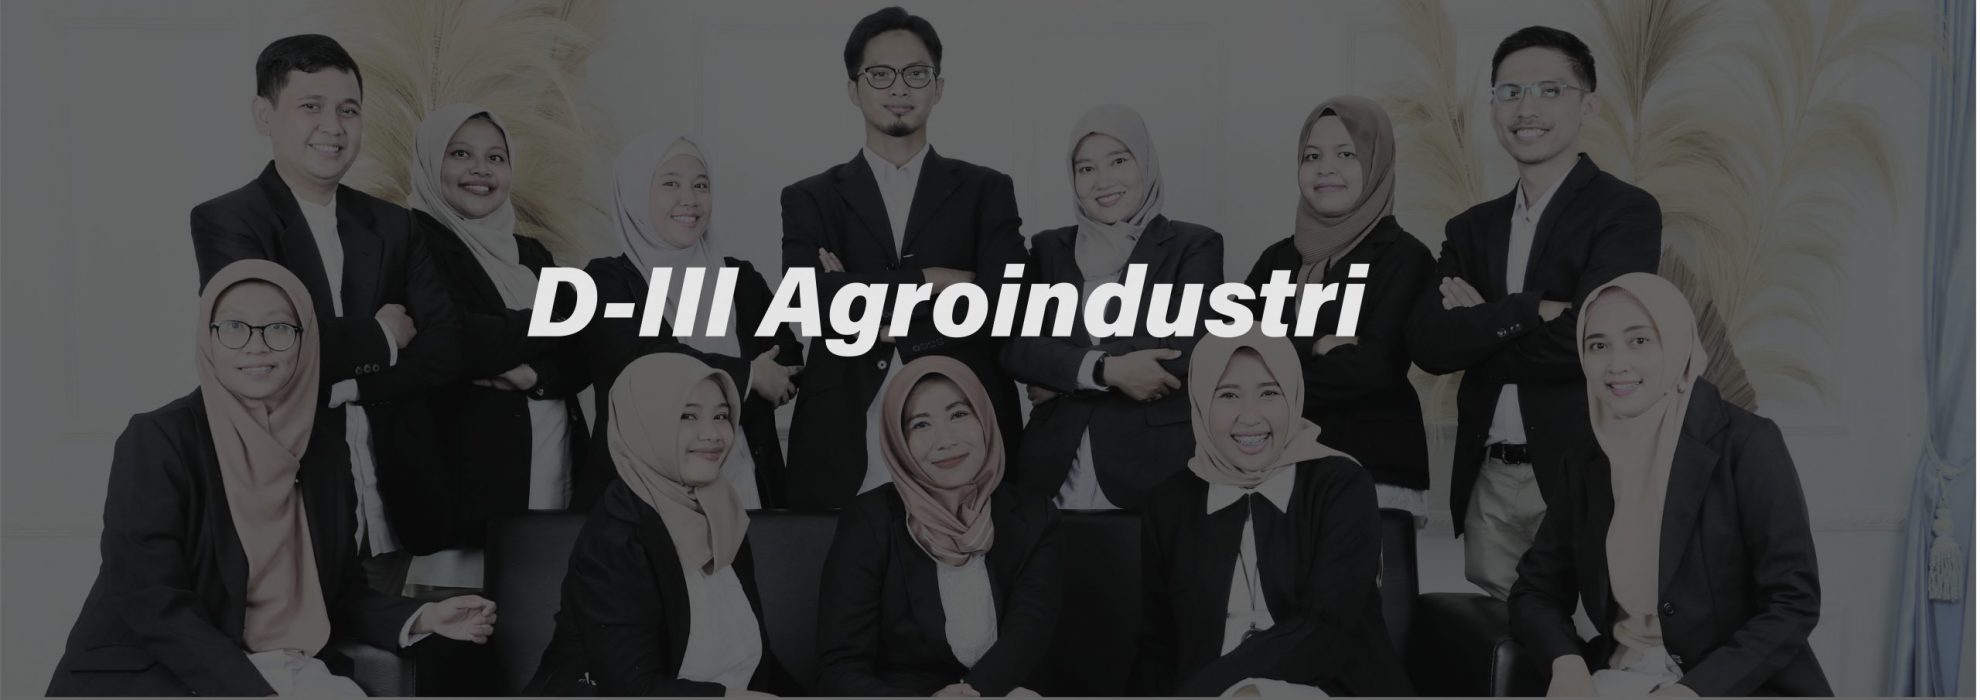 D-III Agroindustri